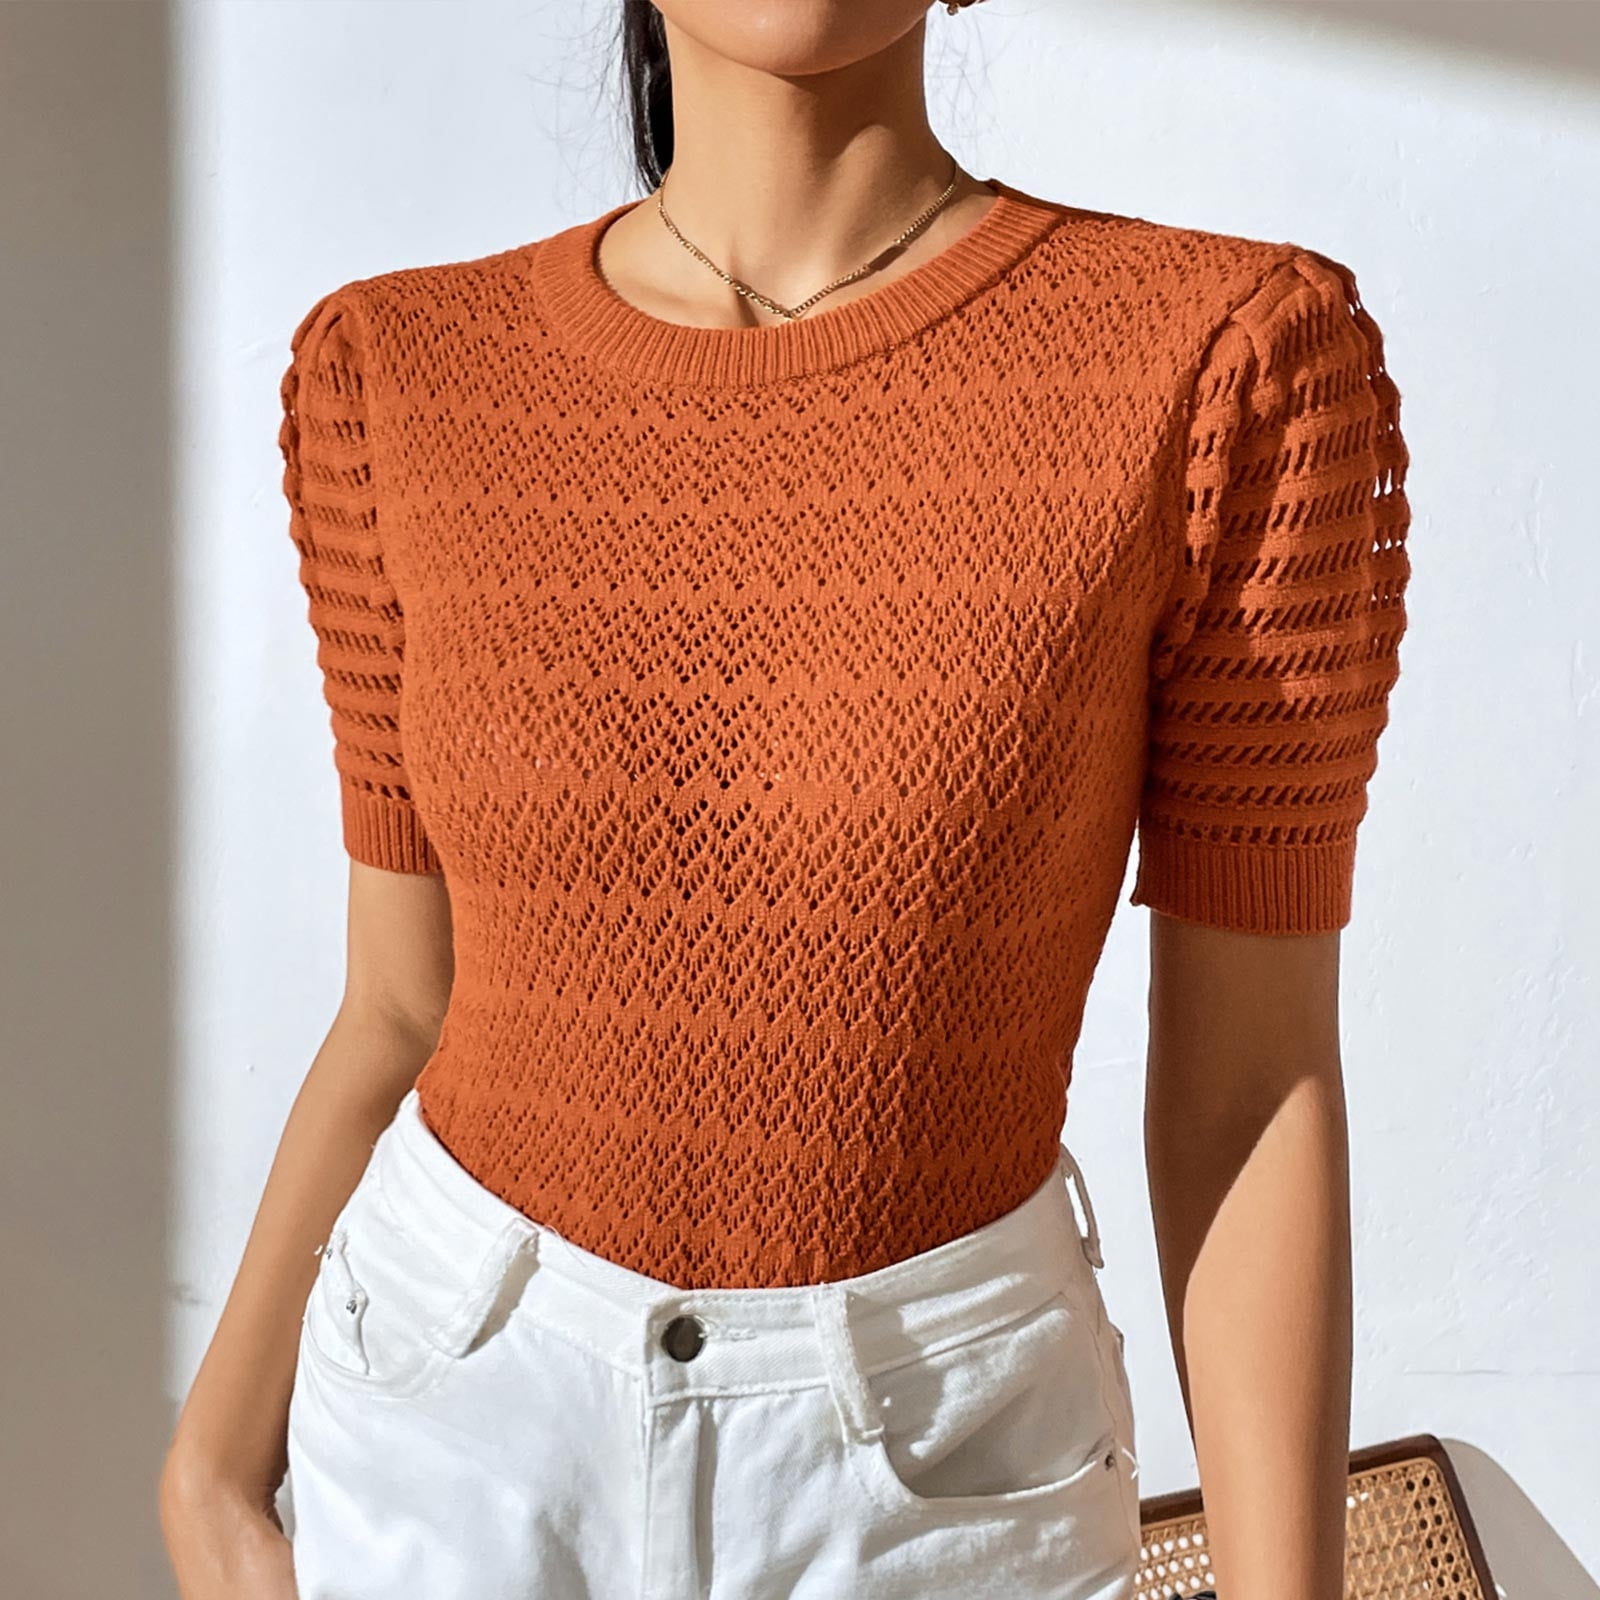 Hfyihgf Women's Puff Short Sleeve Sweater Tops Crew Neck Trendy Hollow Out  Crochet Knit Soft Pullover Shirts(Orange,XL)